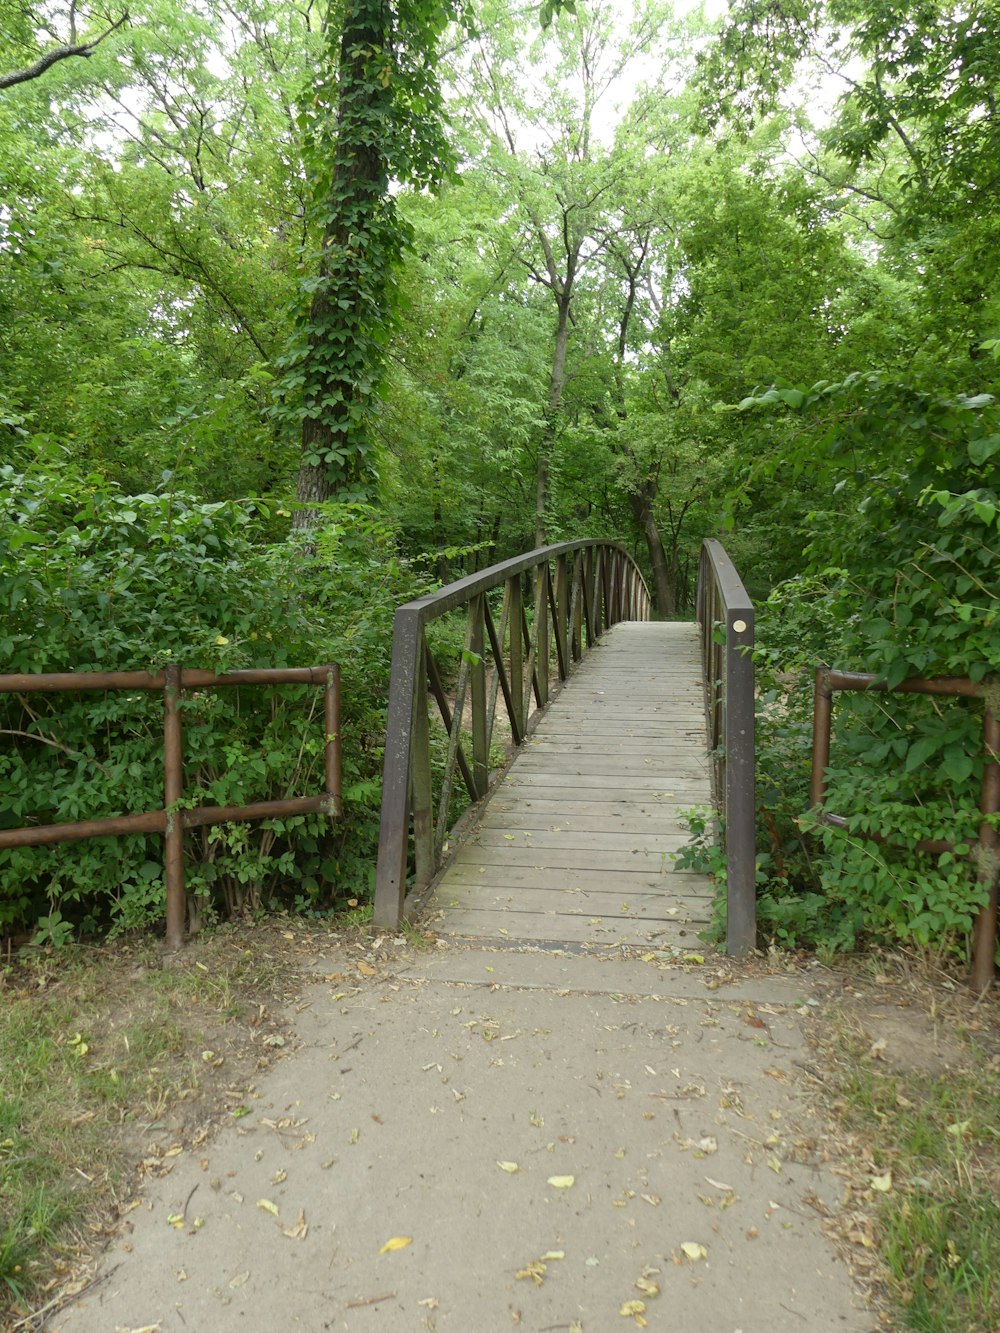 a wooden bridge in the woods